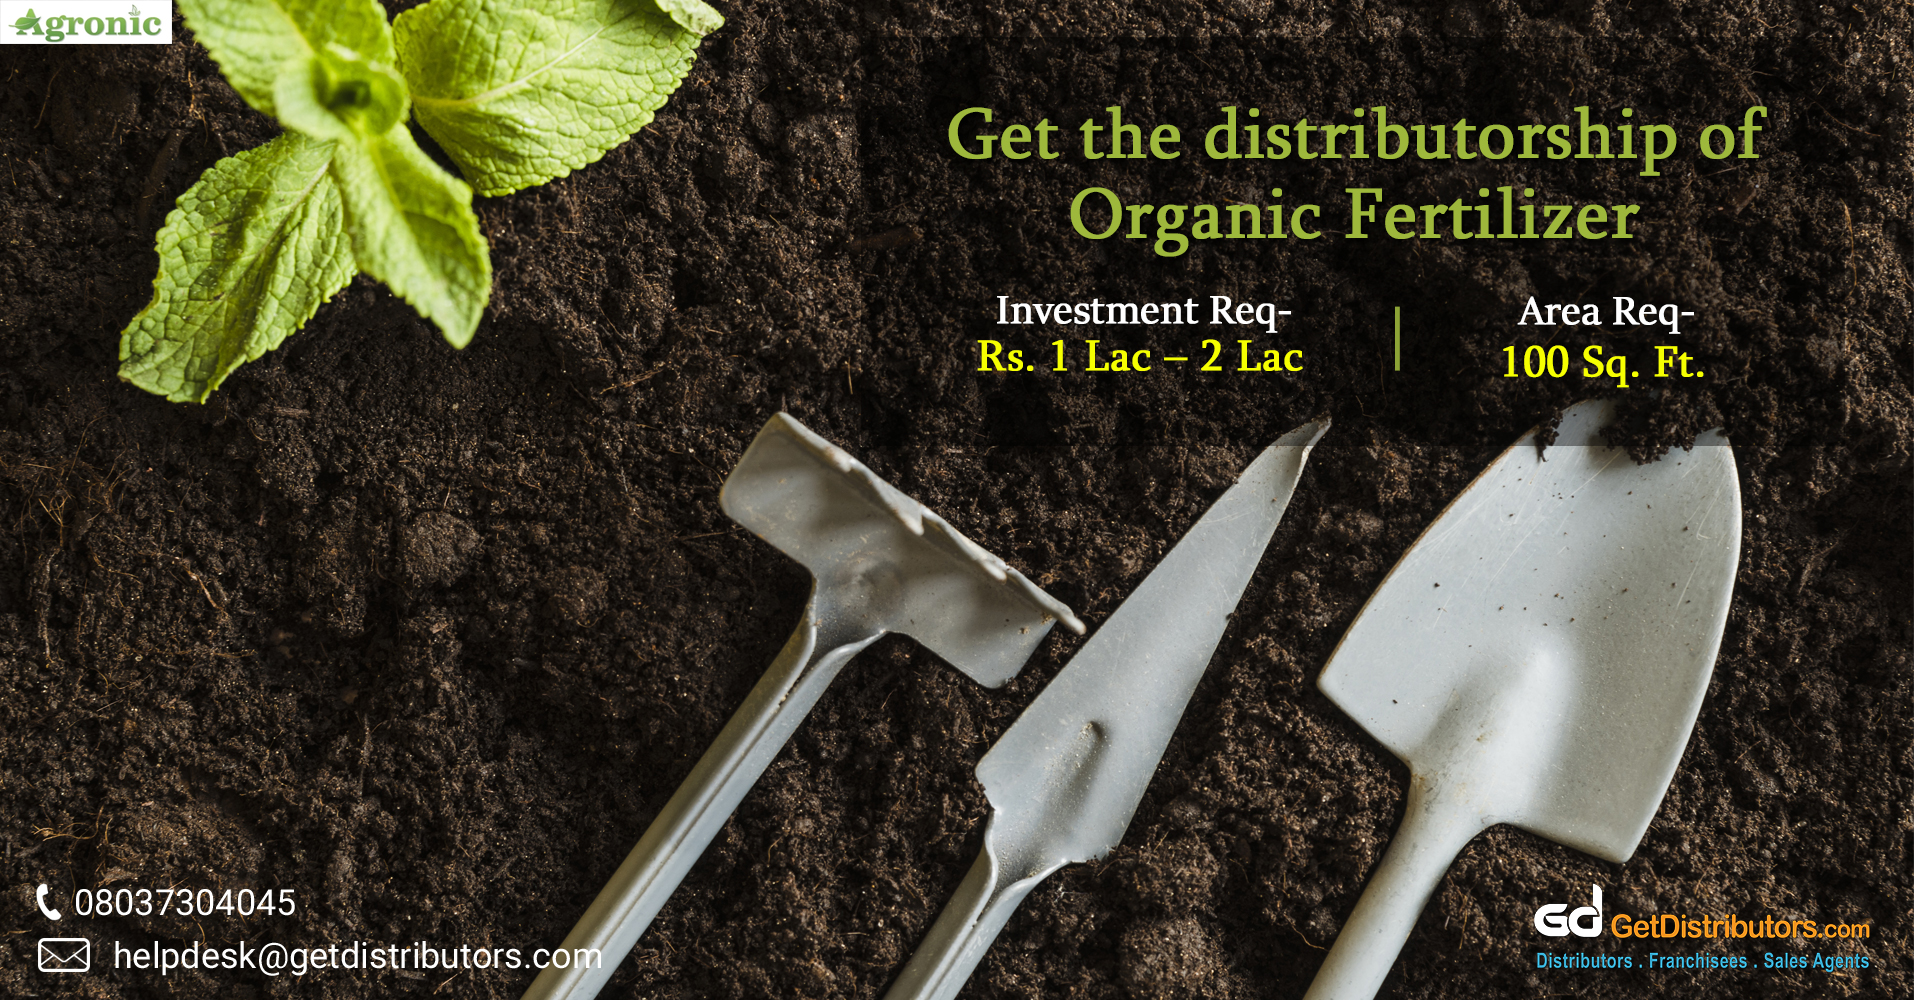 A range of organic liquid fertilizers for distribution